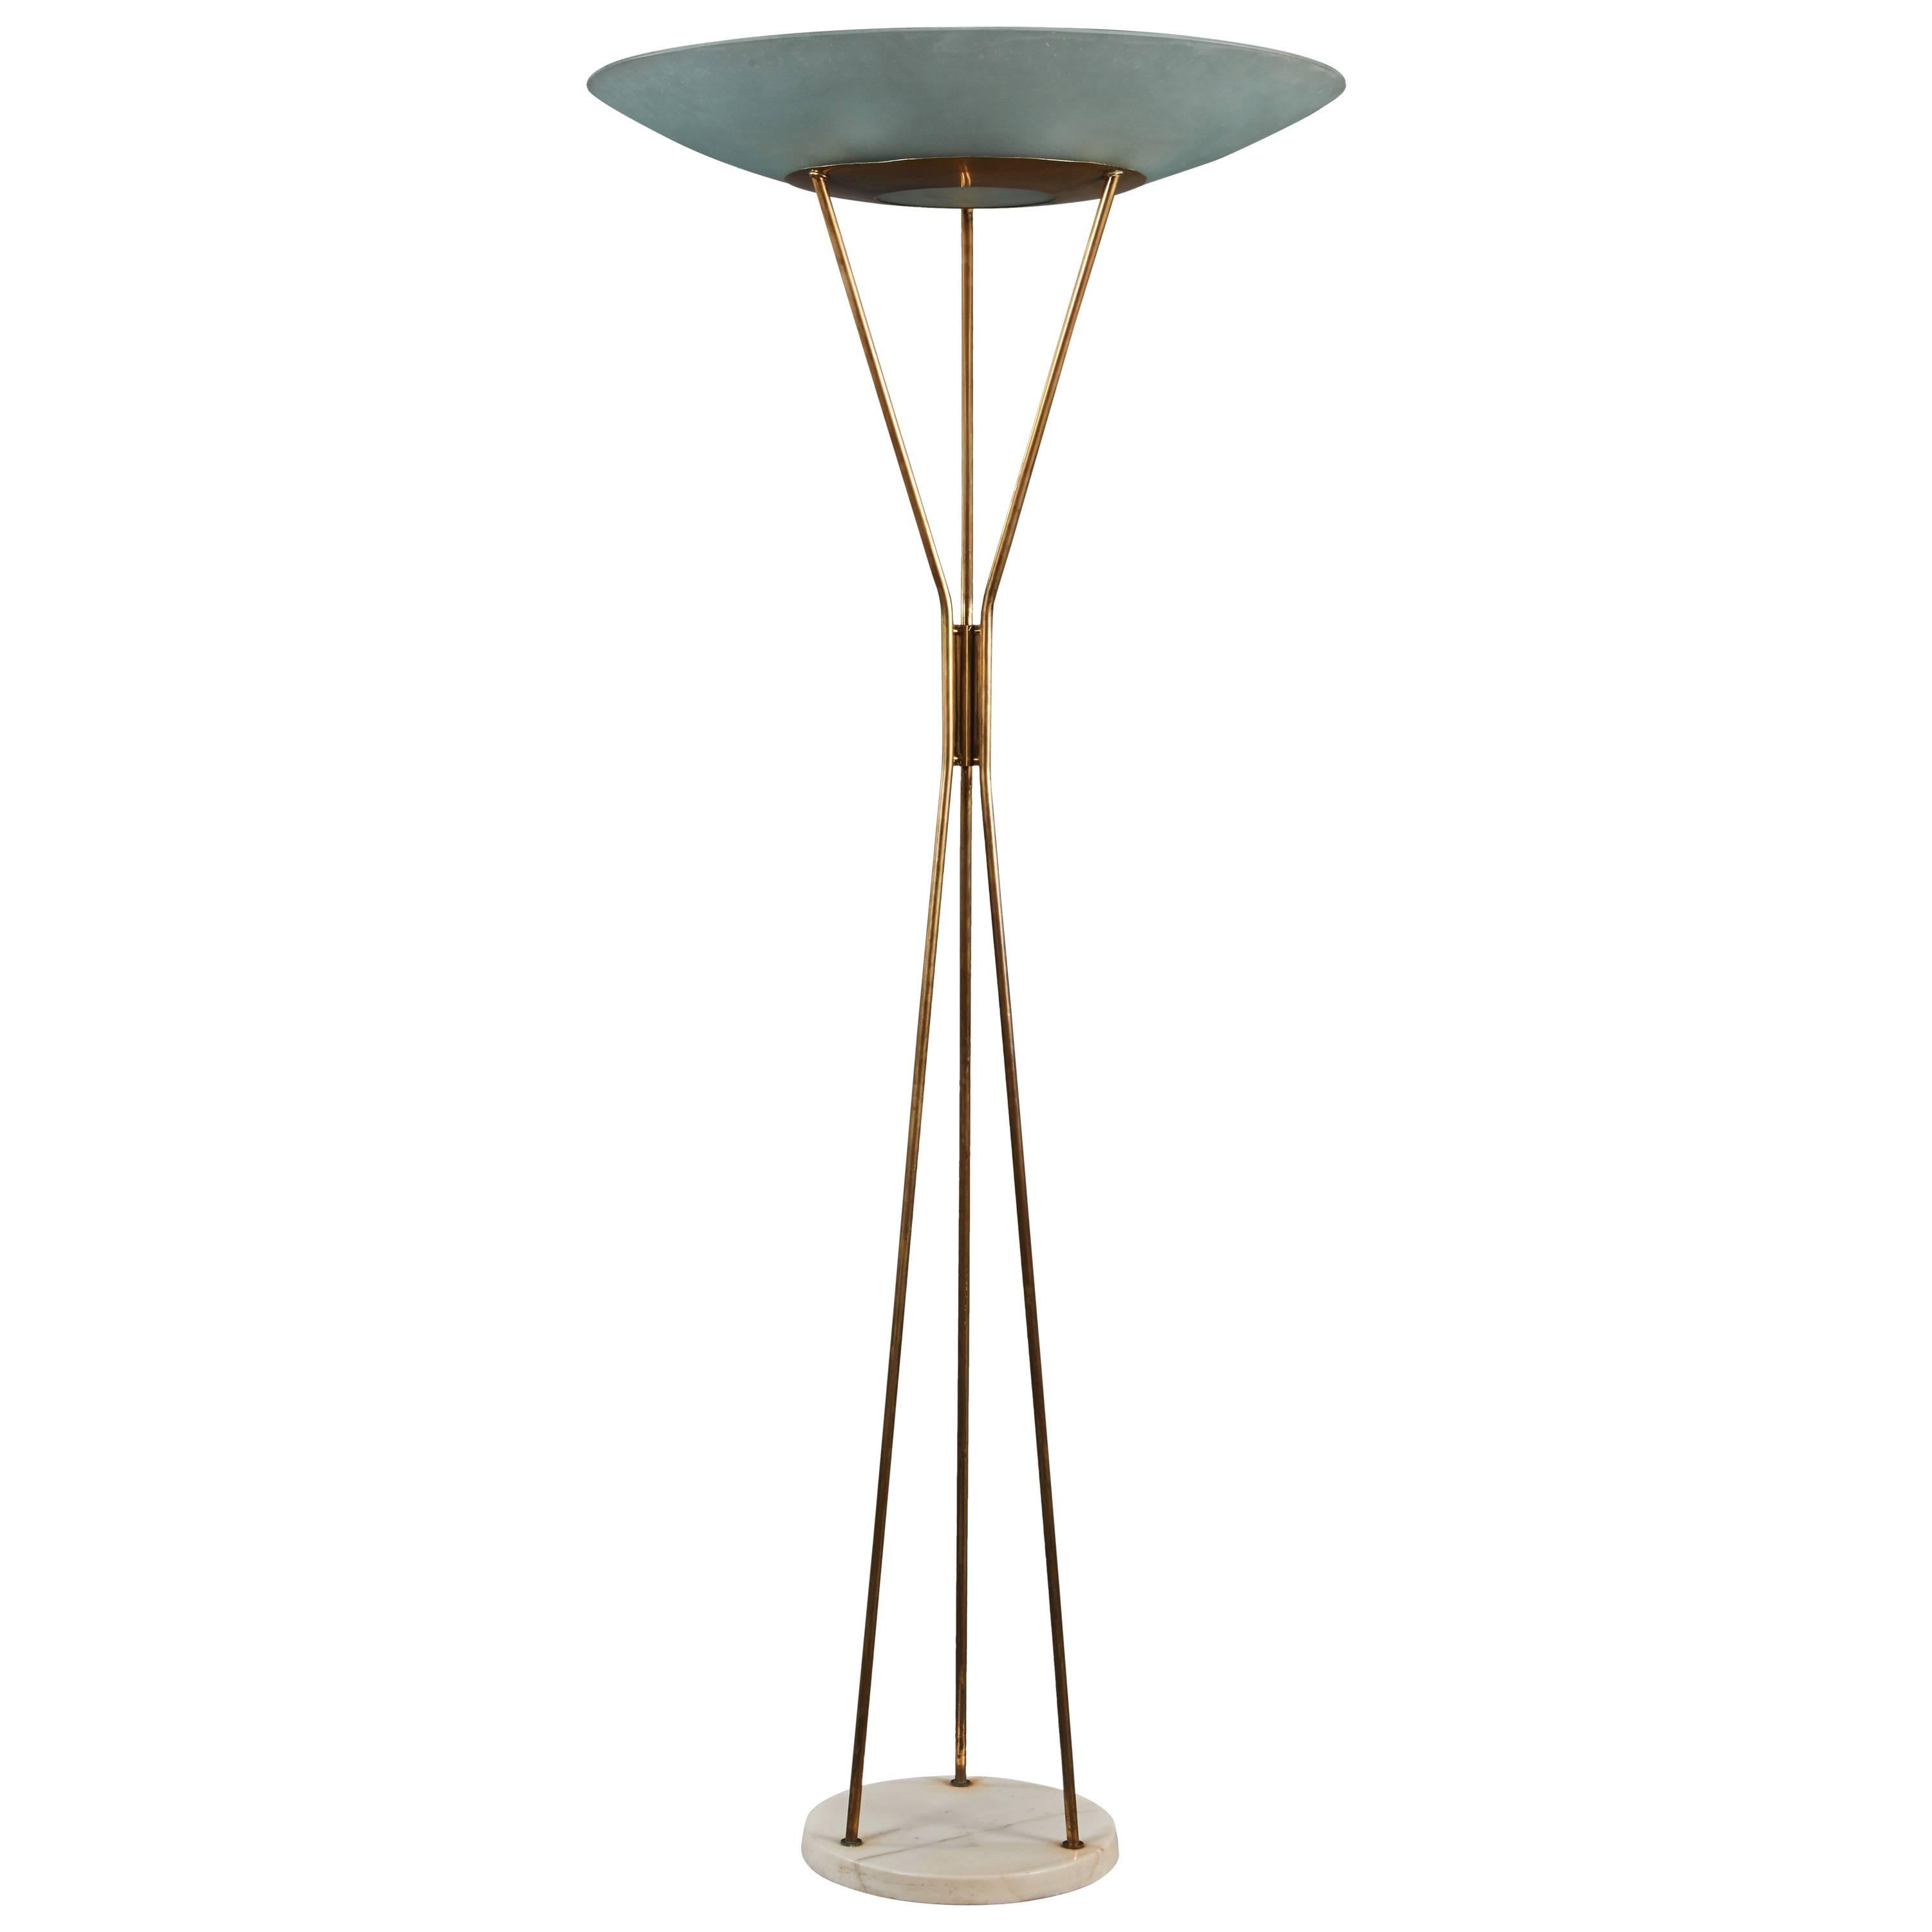 Large and Rare Model 4013 Floor Lamp Designed by Gaetano Sciolari for Stilnovo